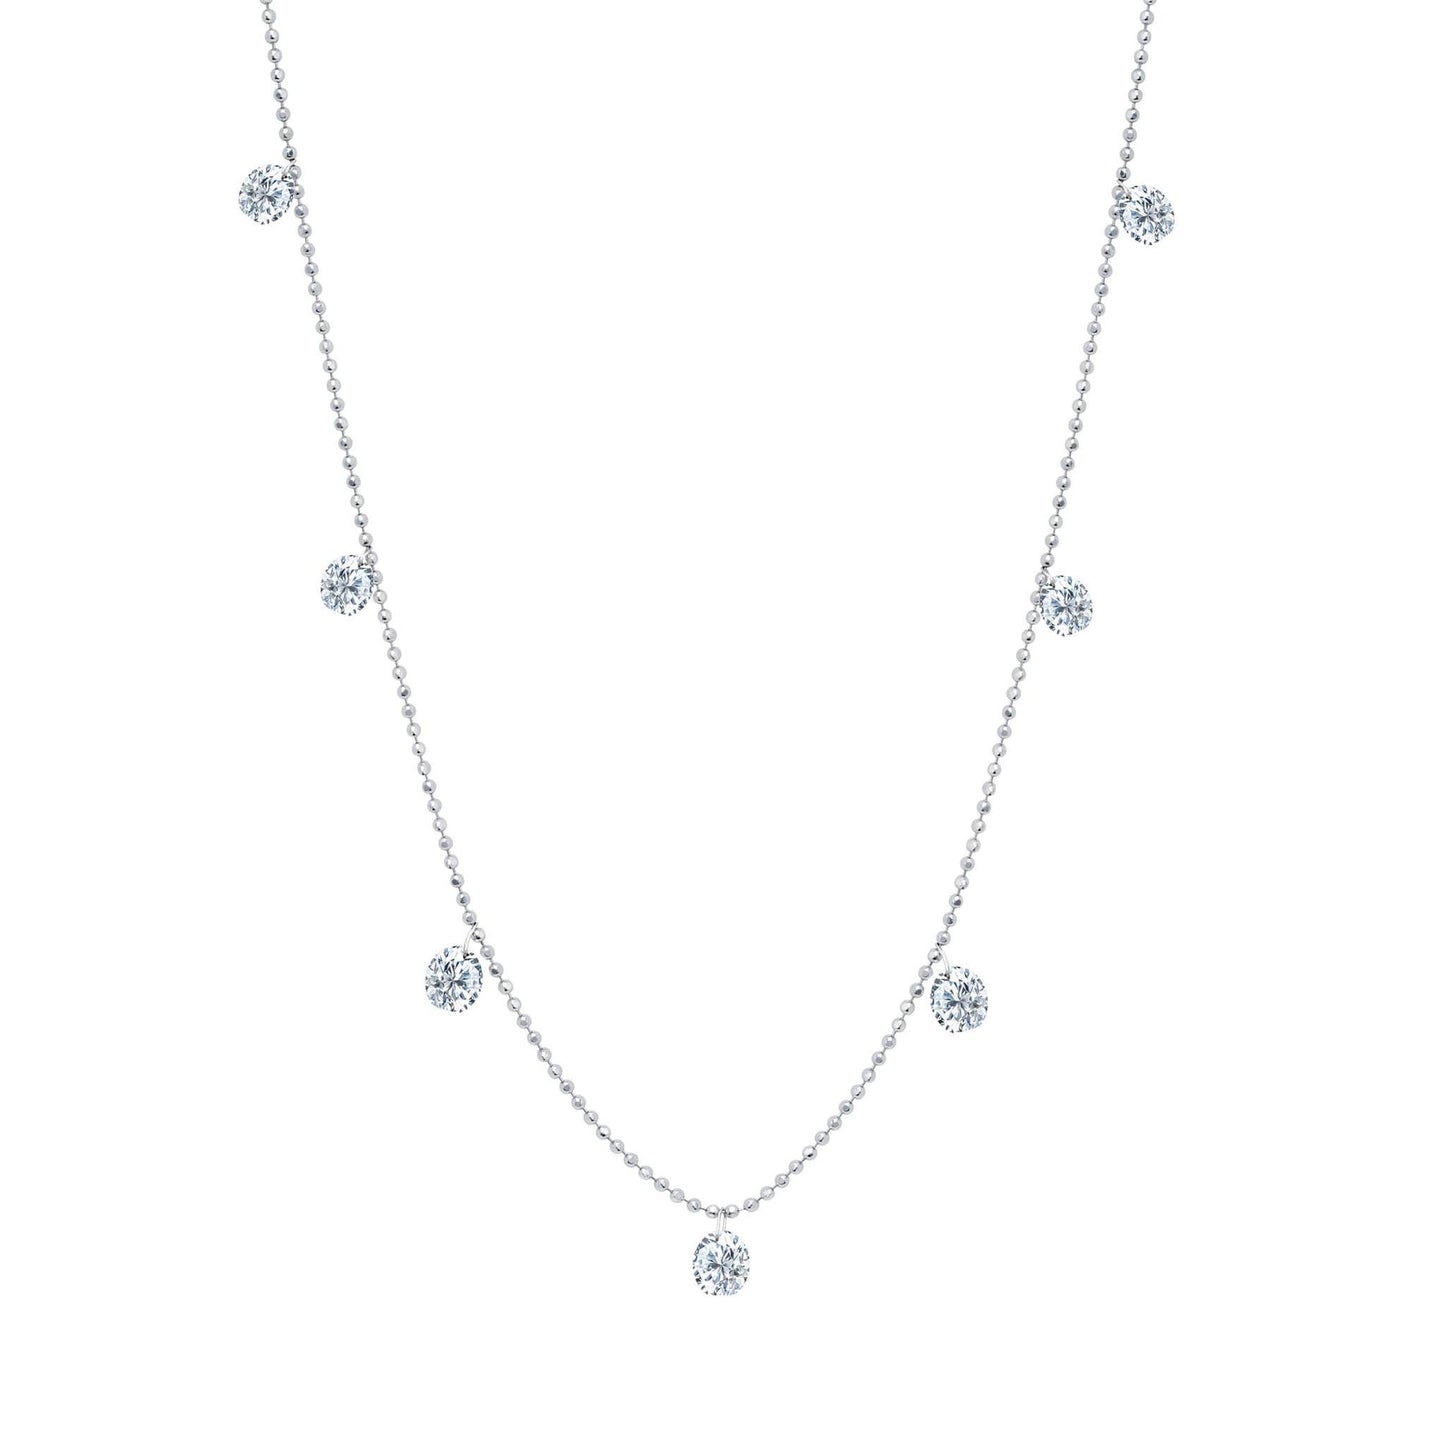 Medium Floating Diamond Necklace in White